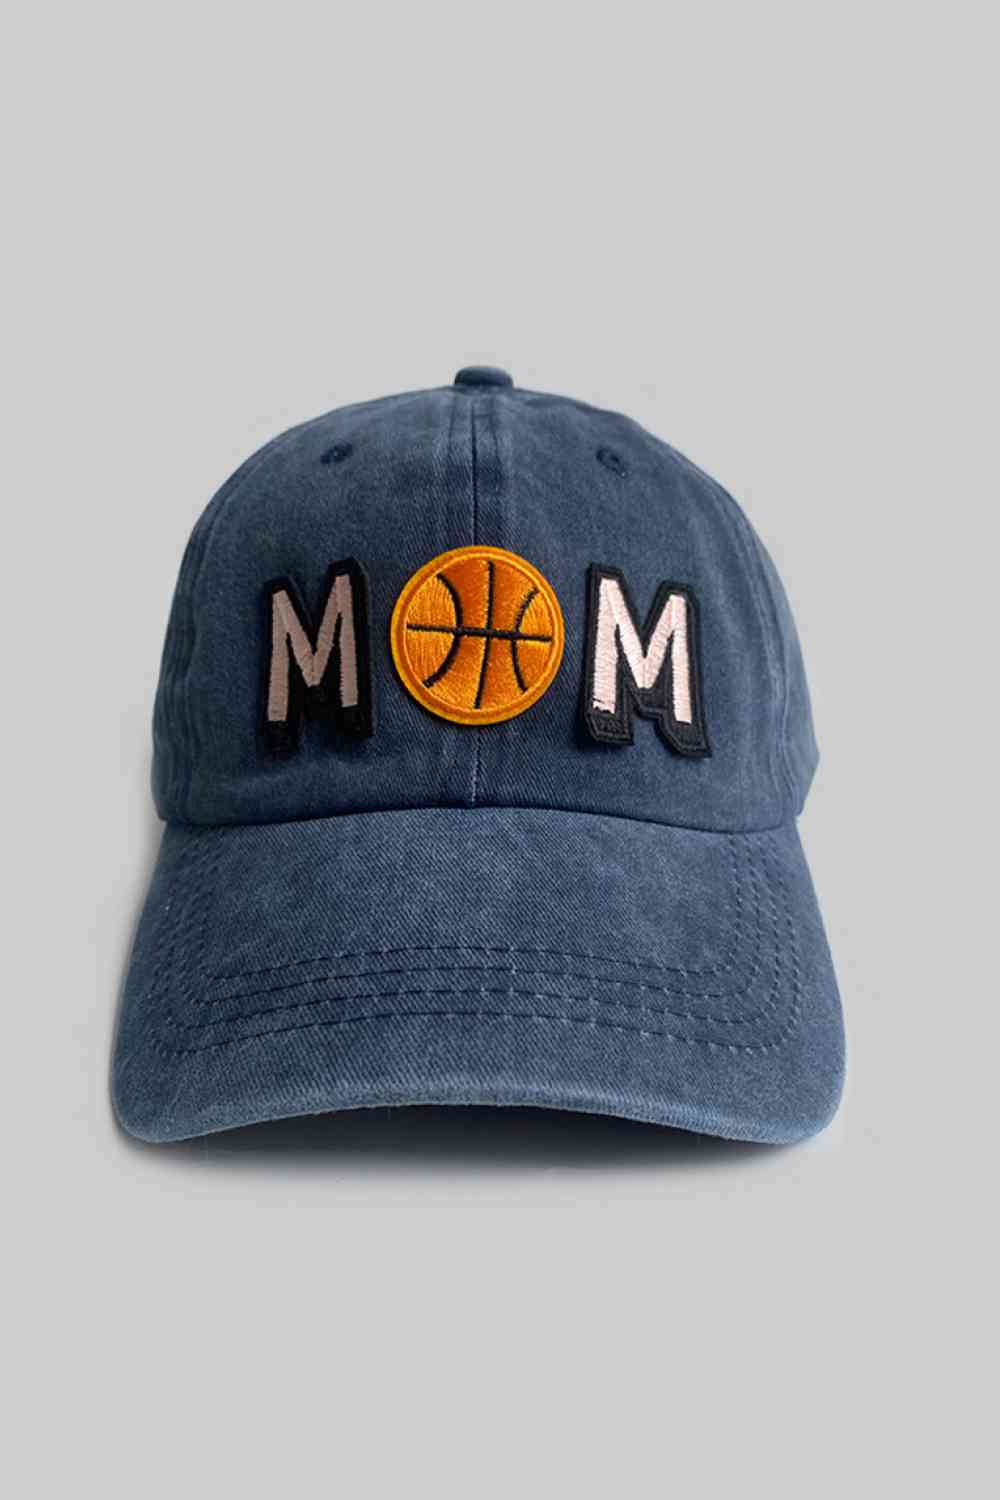 MOM HAT One Size Baseball Cap